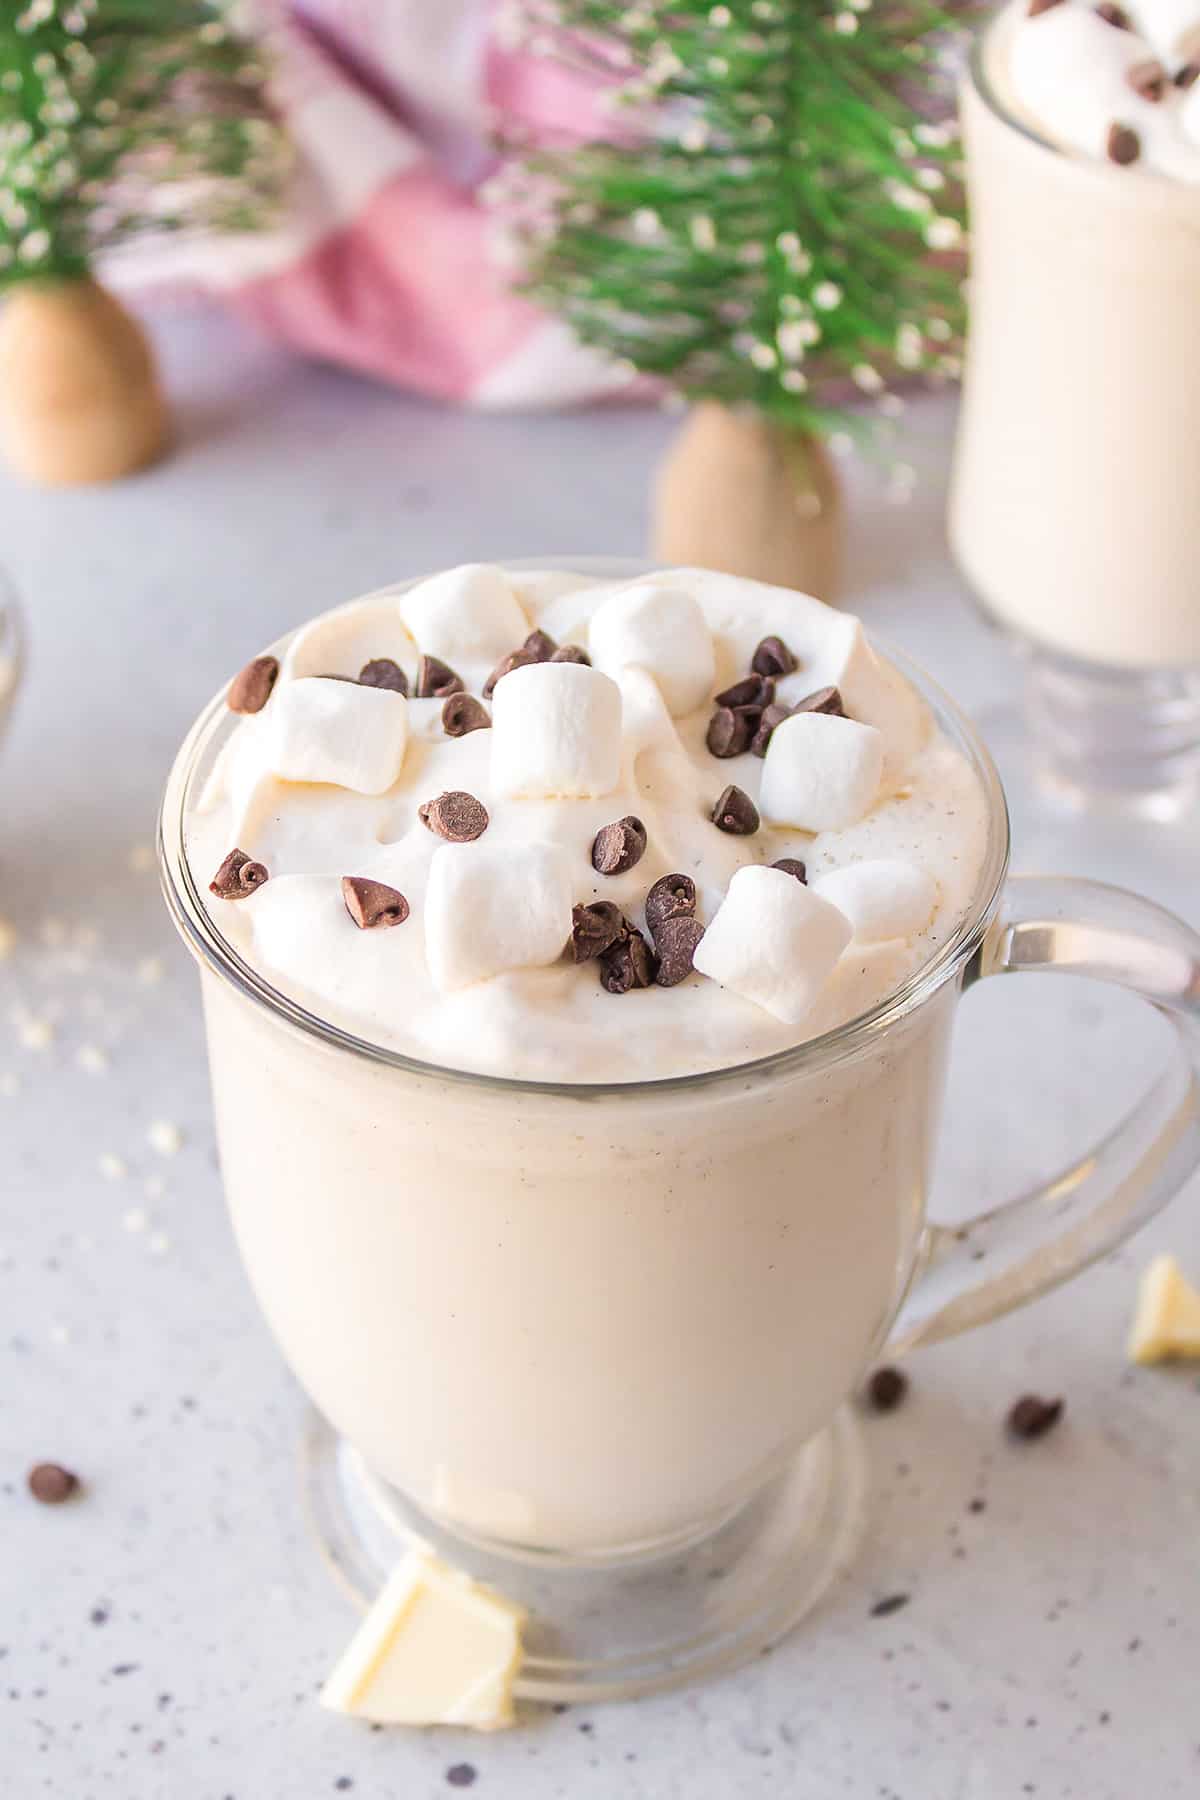 Creamy white hot chocolate in glass mug.